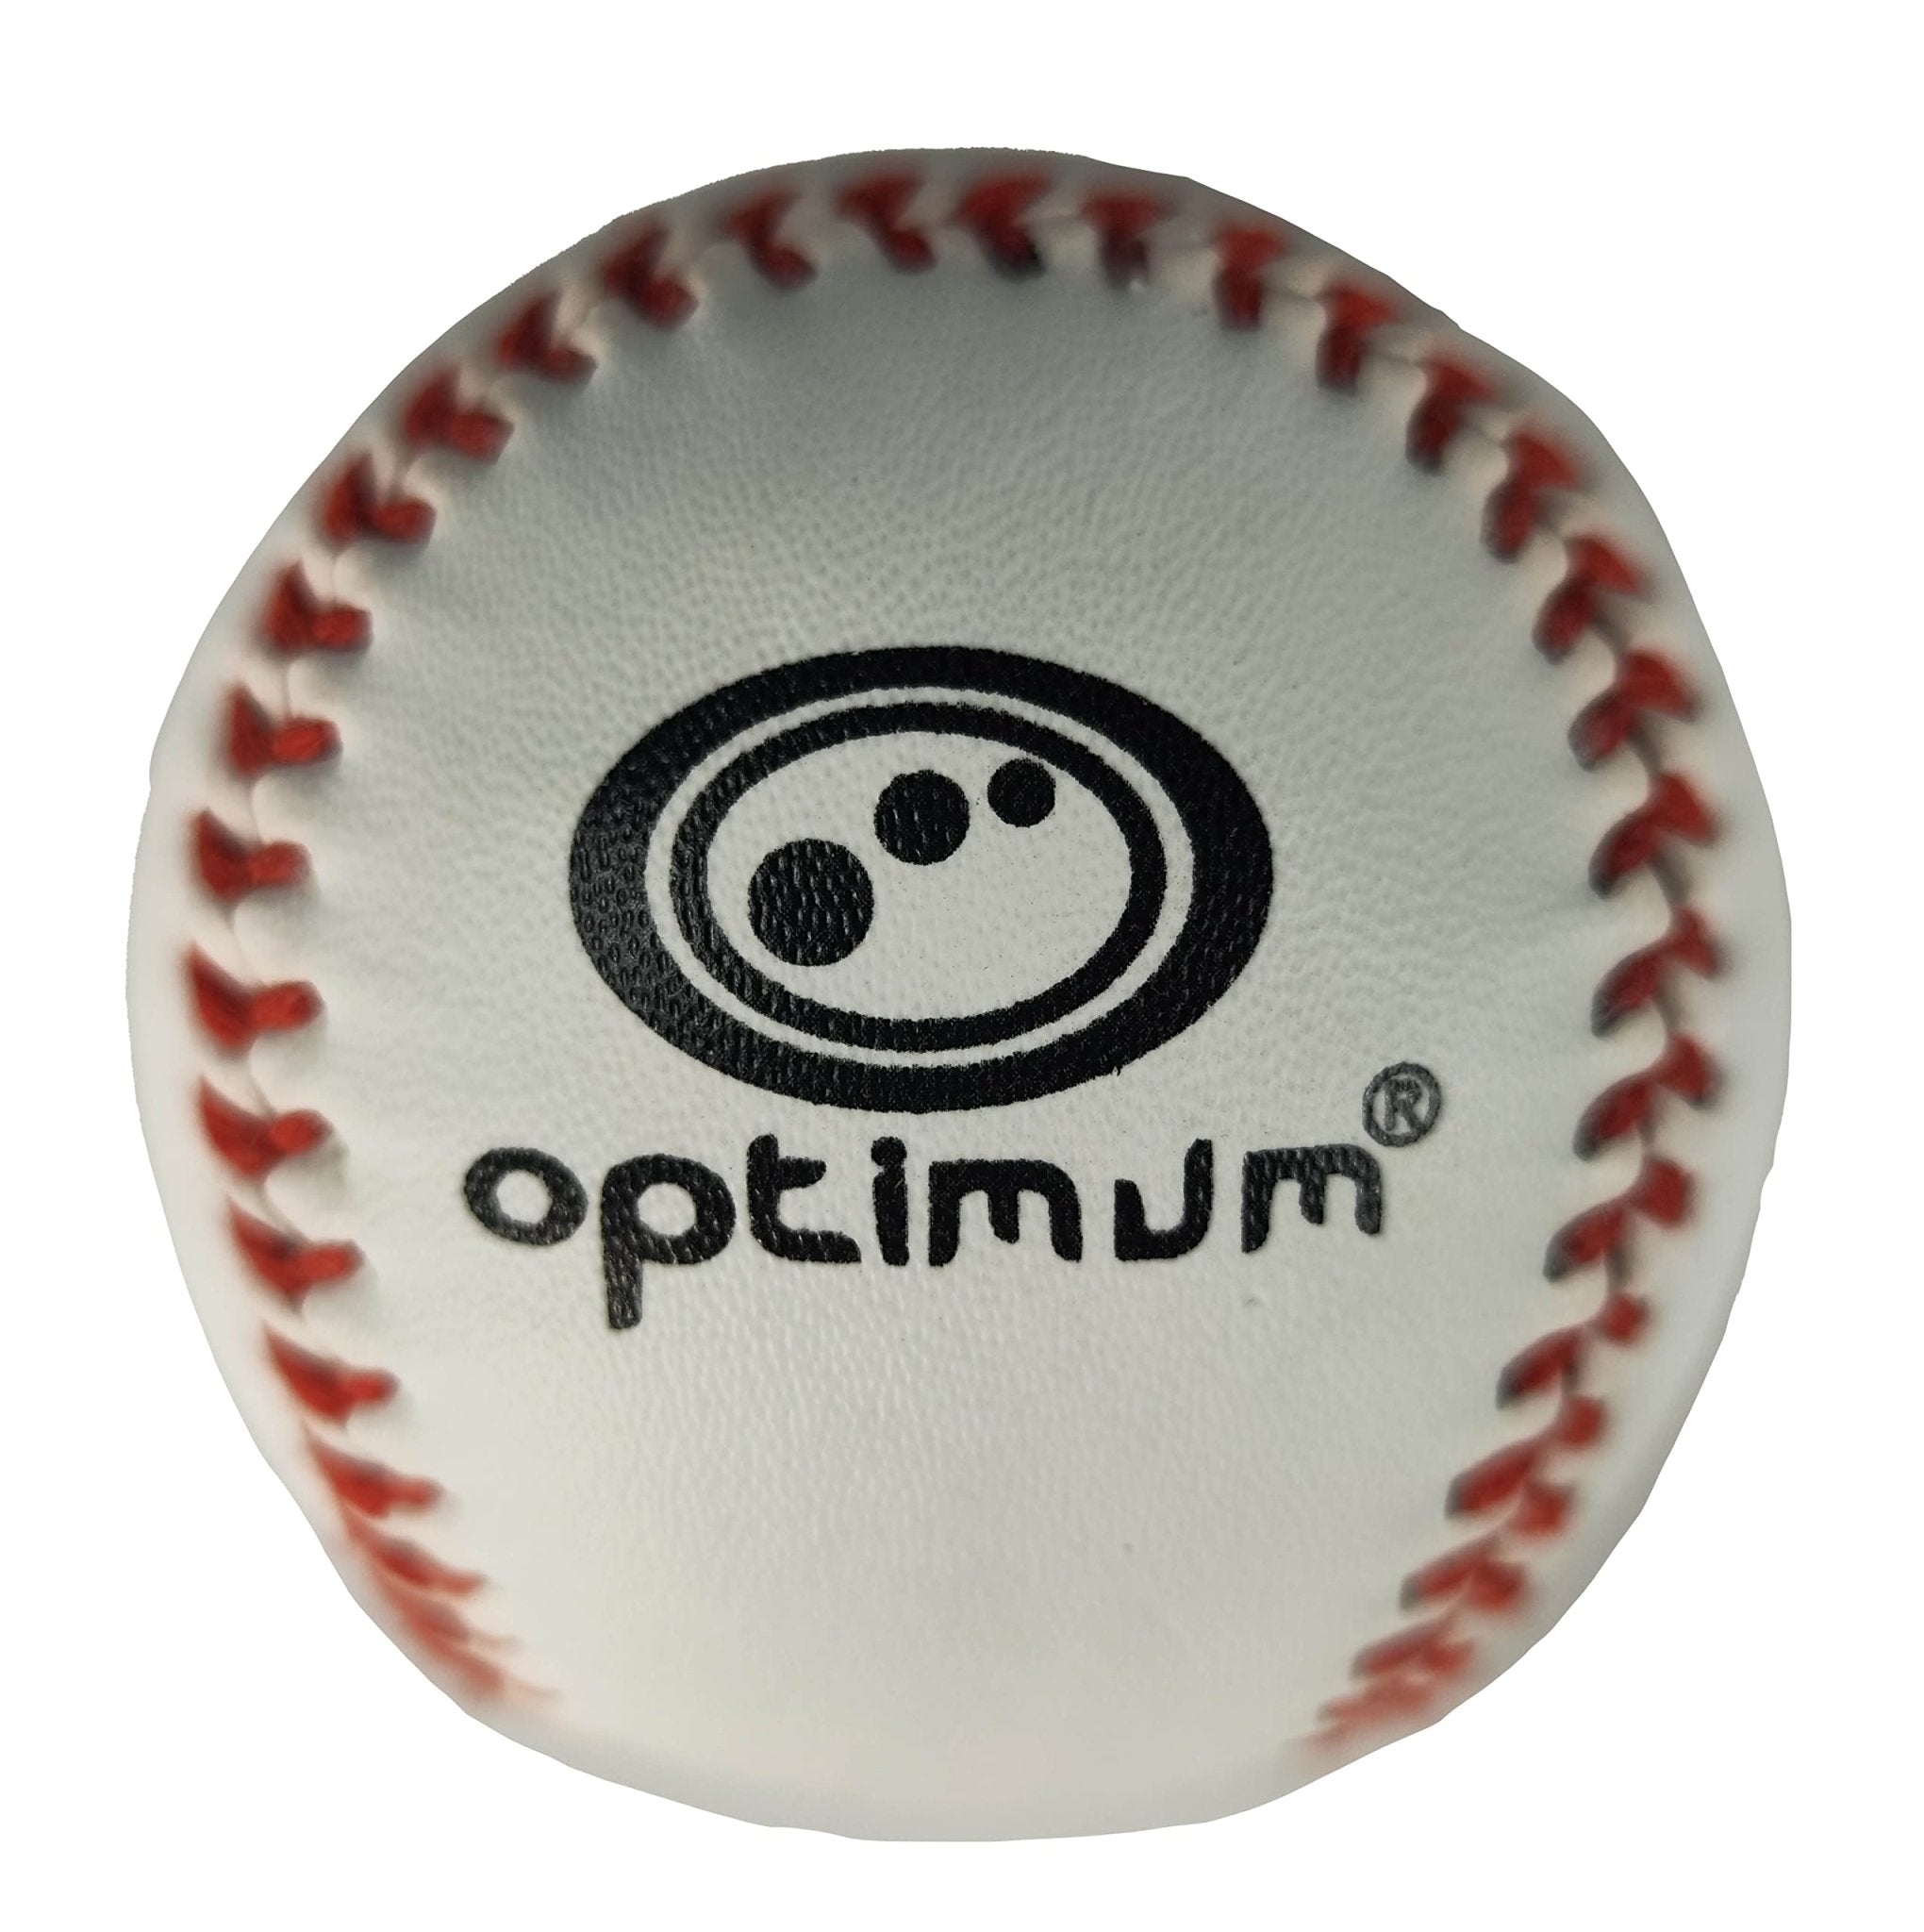 Optimum Rounders Ball - Optimum